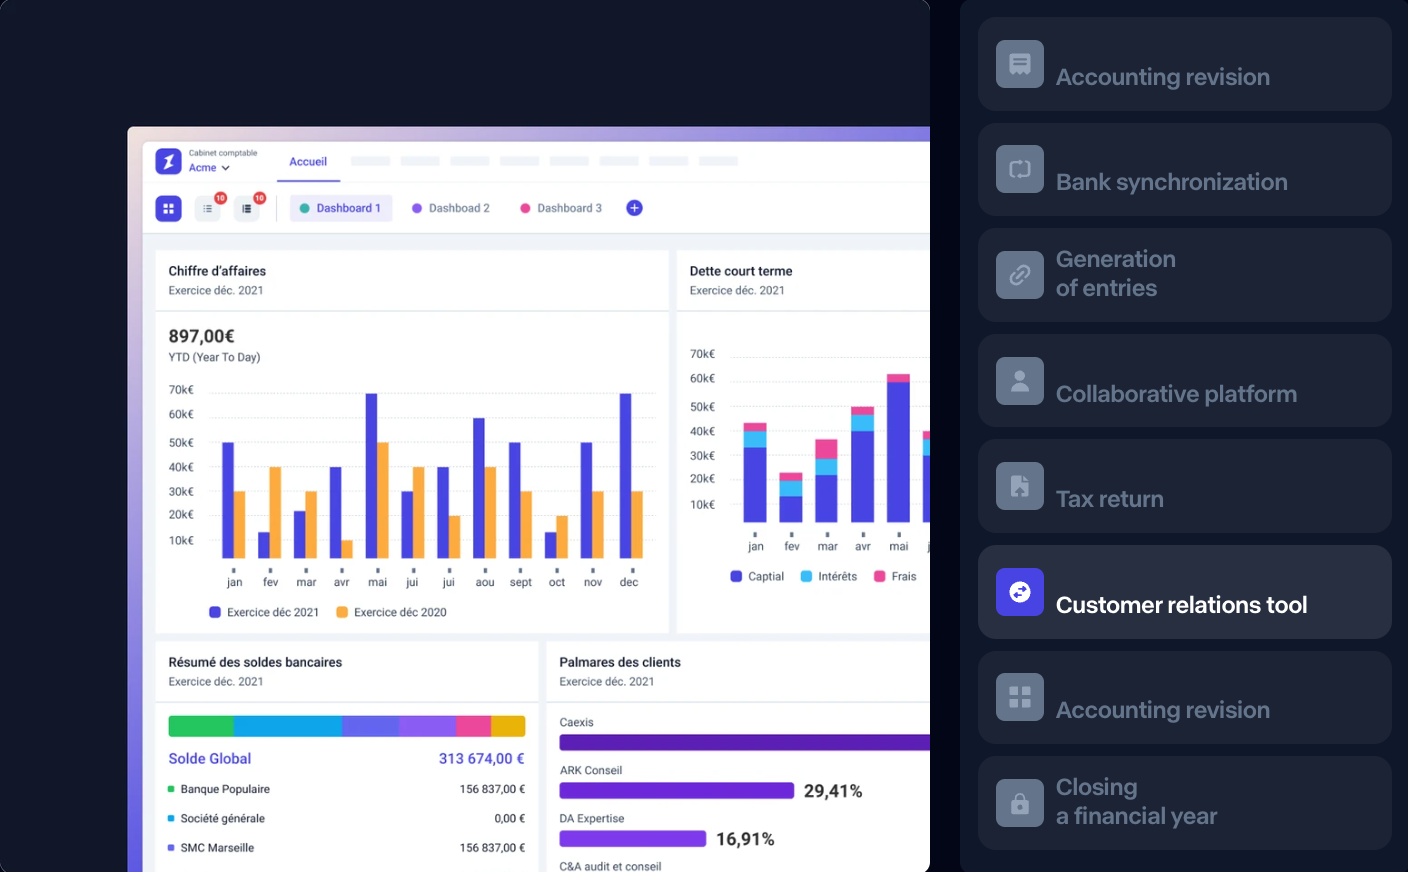 Inqom dashboard - Customer relations tool